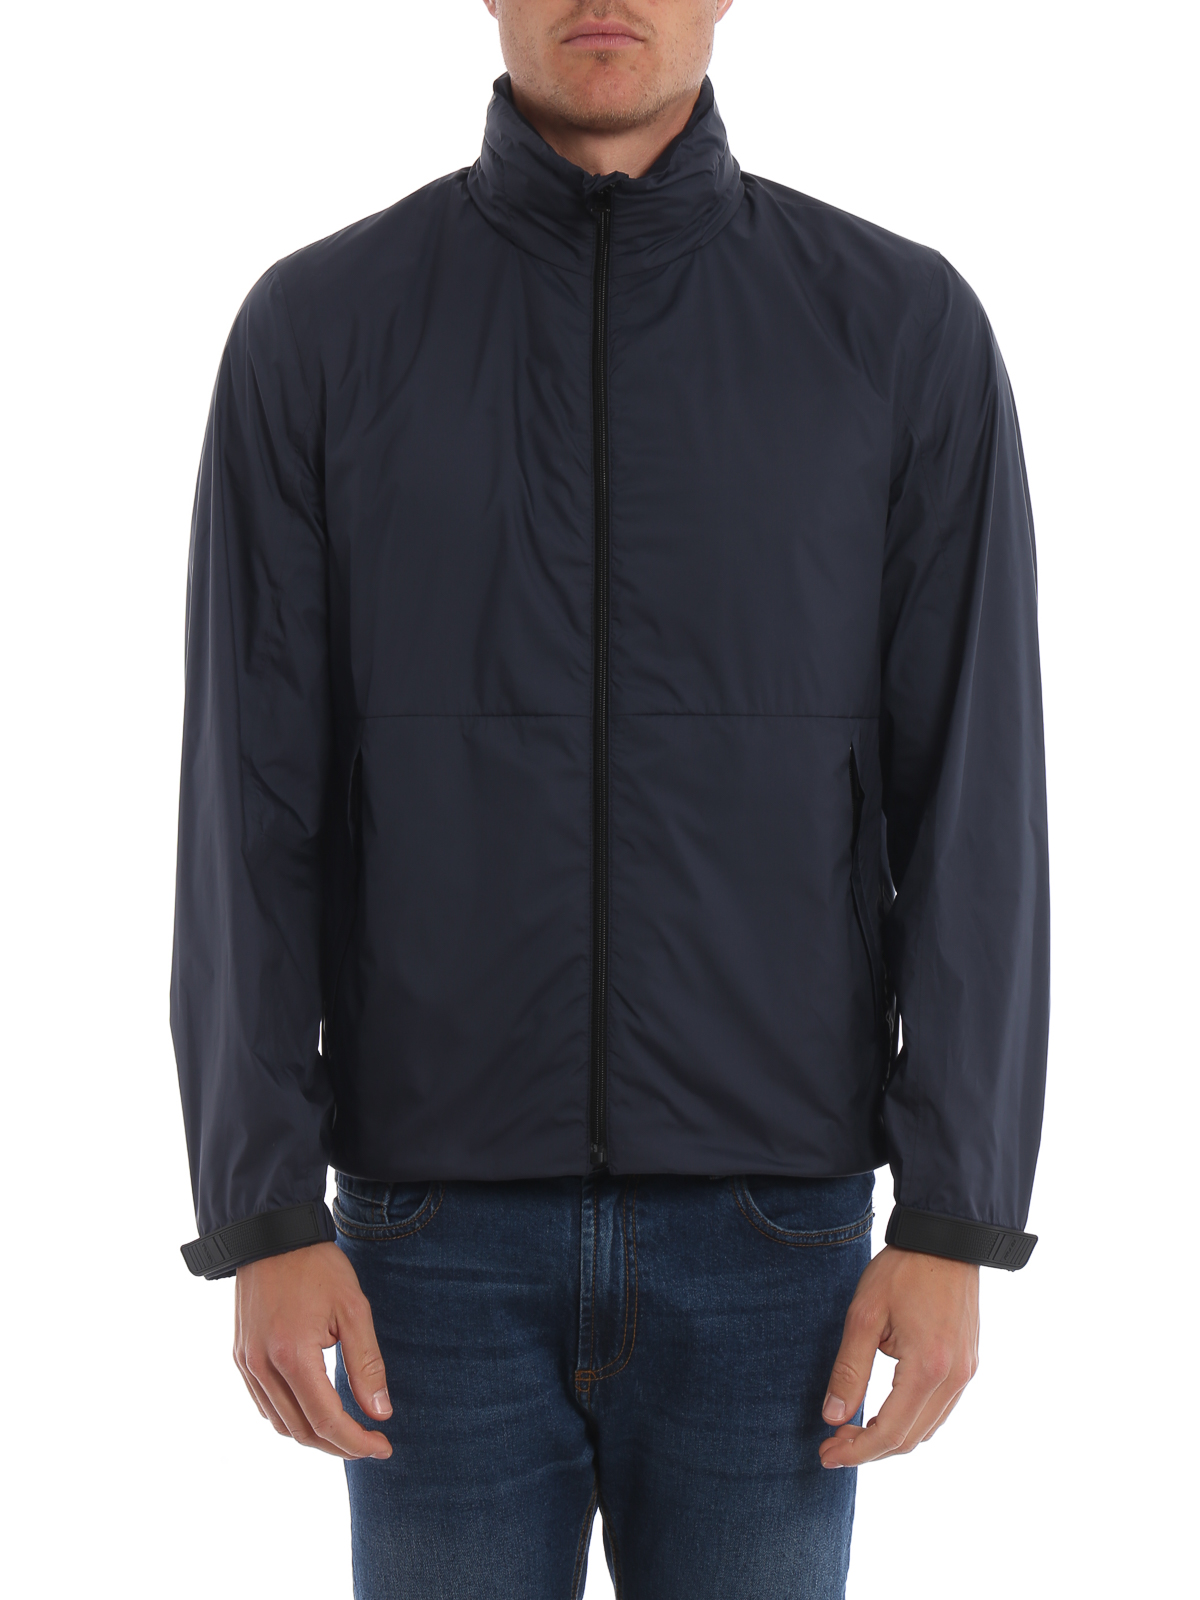 Casual jackets Prada - Nylon Tech light navy blue jacket - SGN9871S0G124